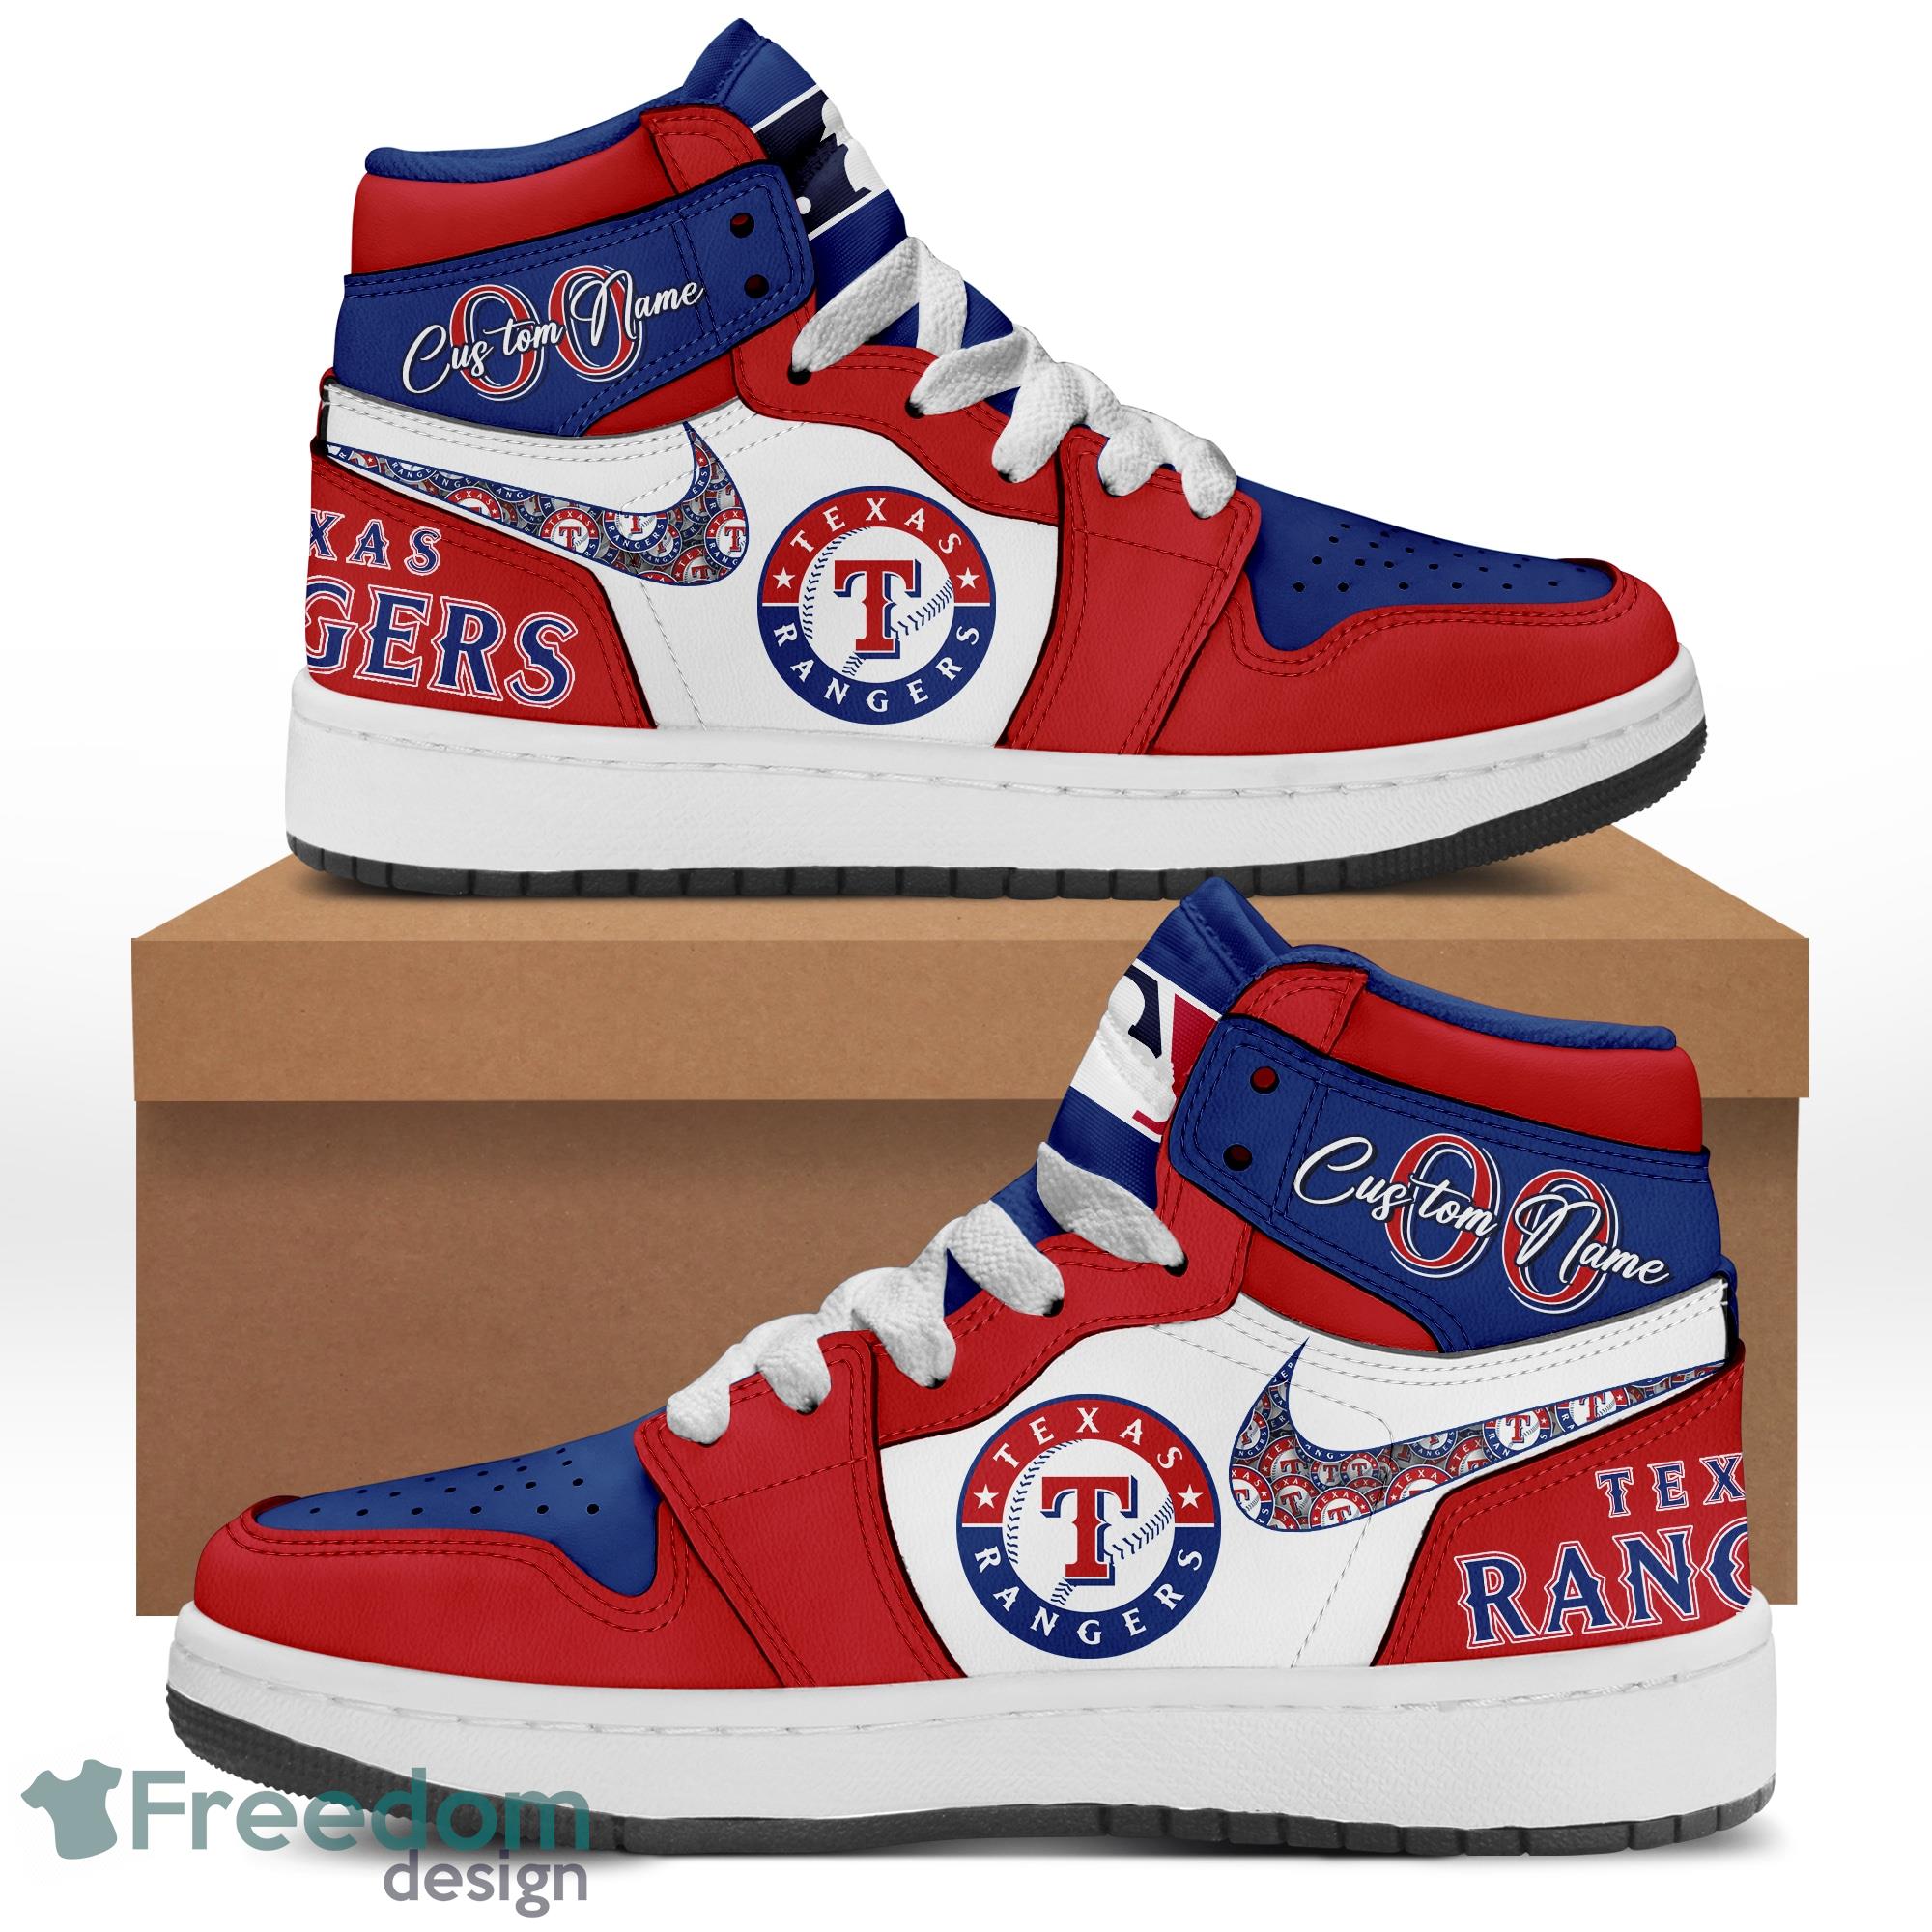 Texas Rangers Special Edition Air Jordan Hightop Shoes - Freedomdesign